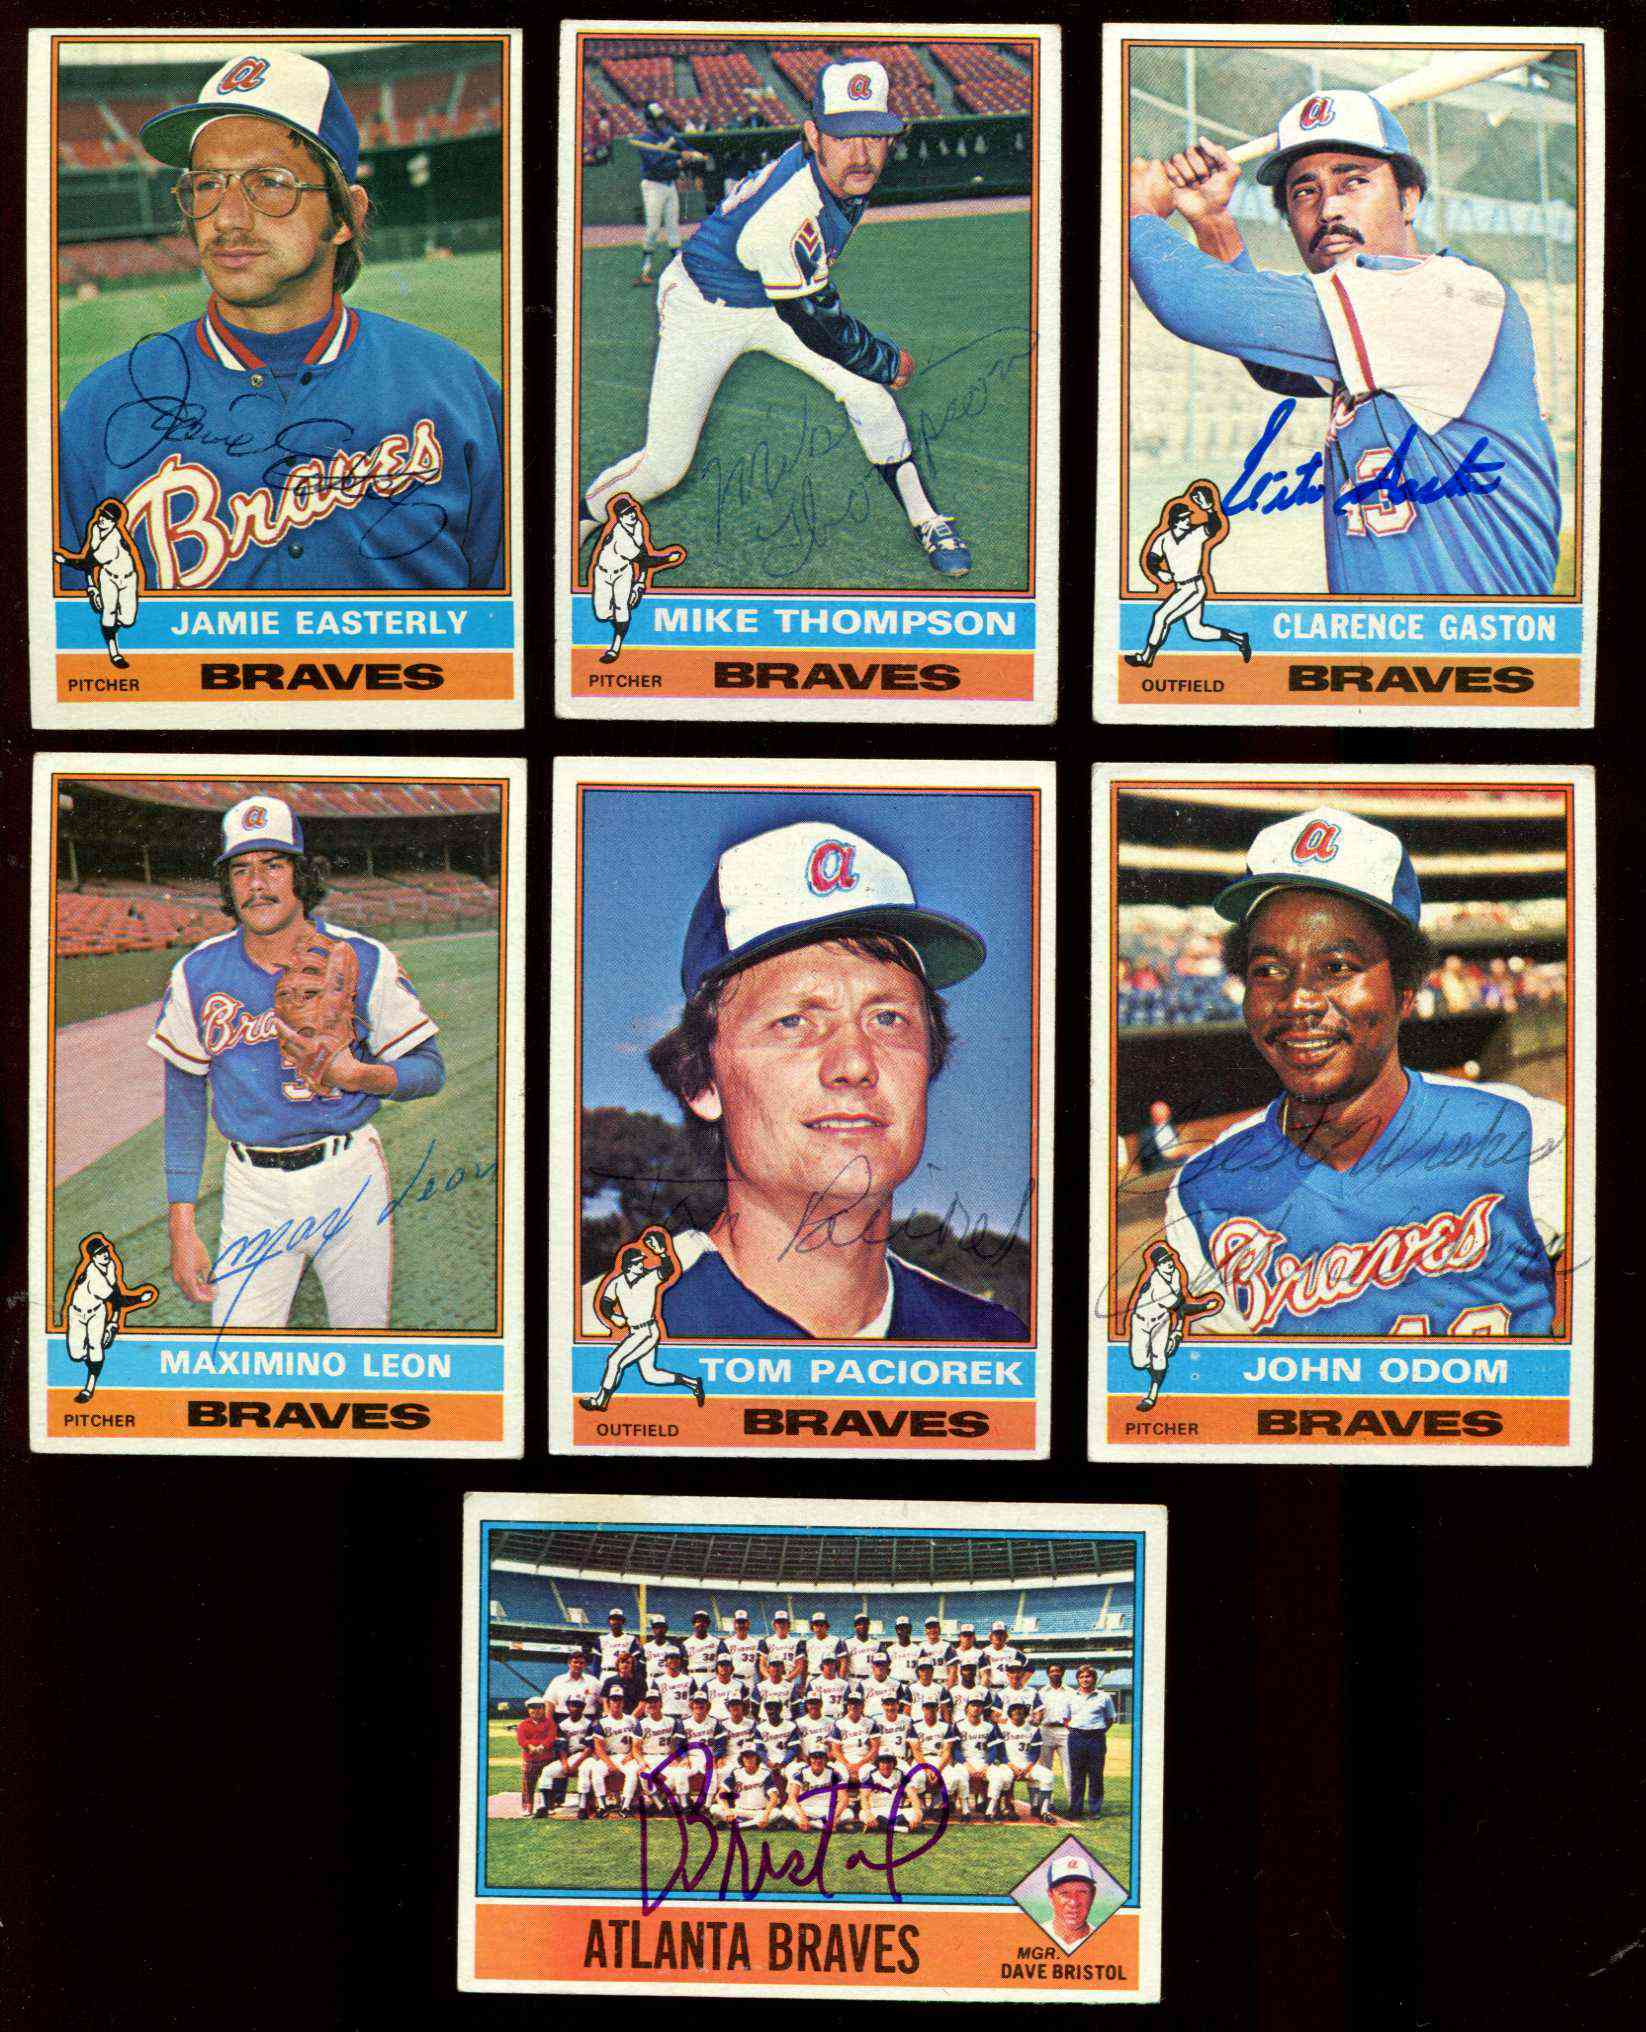 1976 Topps Baseball Cards Checklist, Set Info, Key Cards, Analysis, More